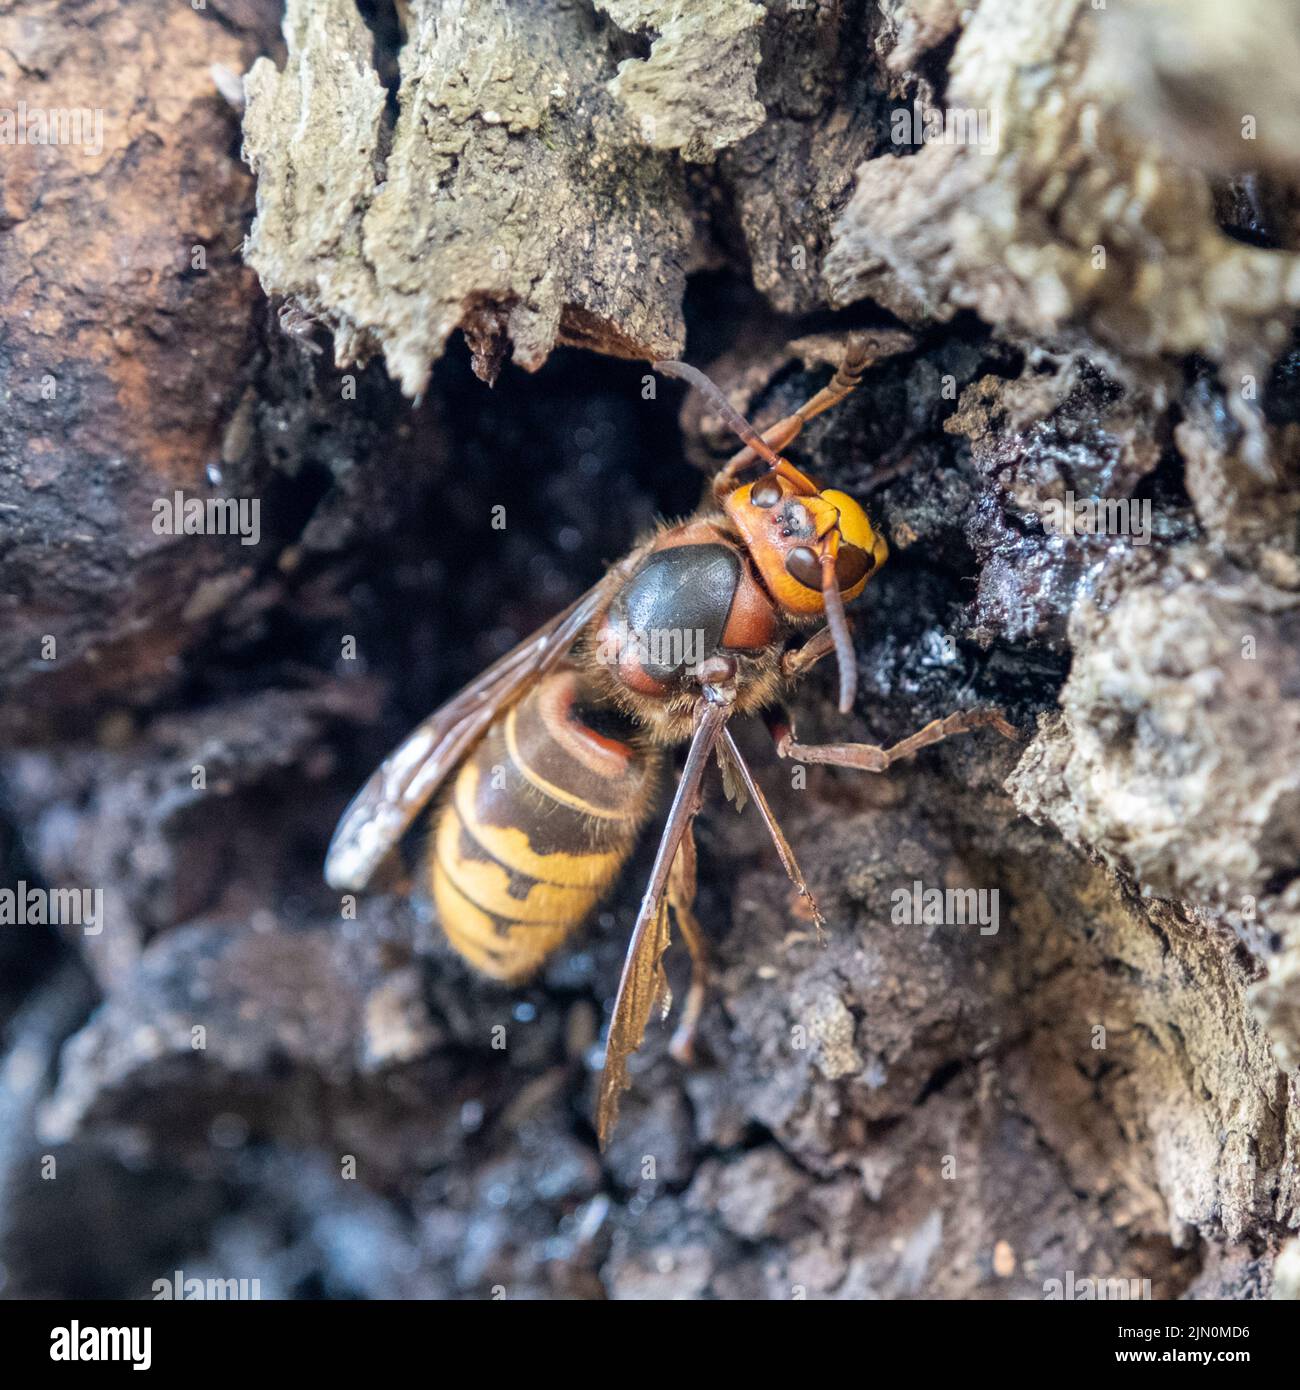 A large wasp near a tree drinks tree sap. Stock Photo